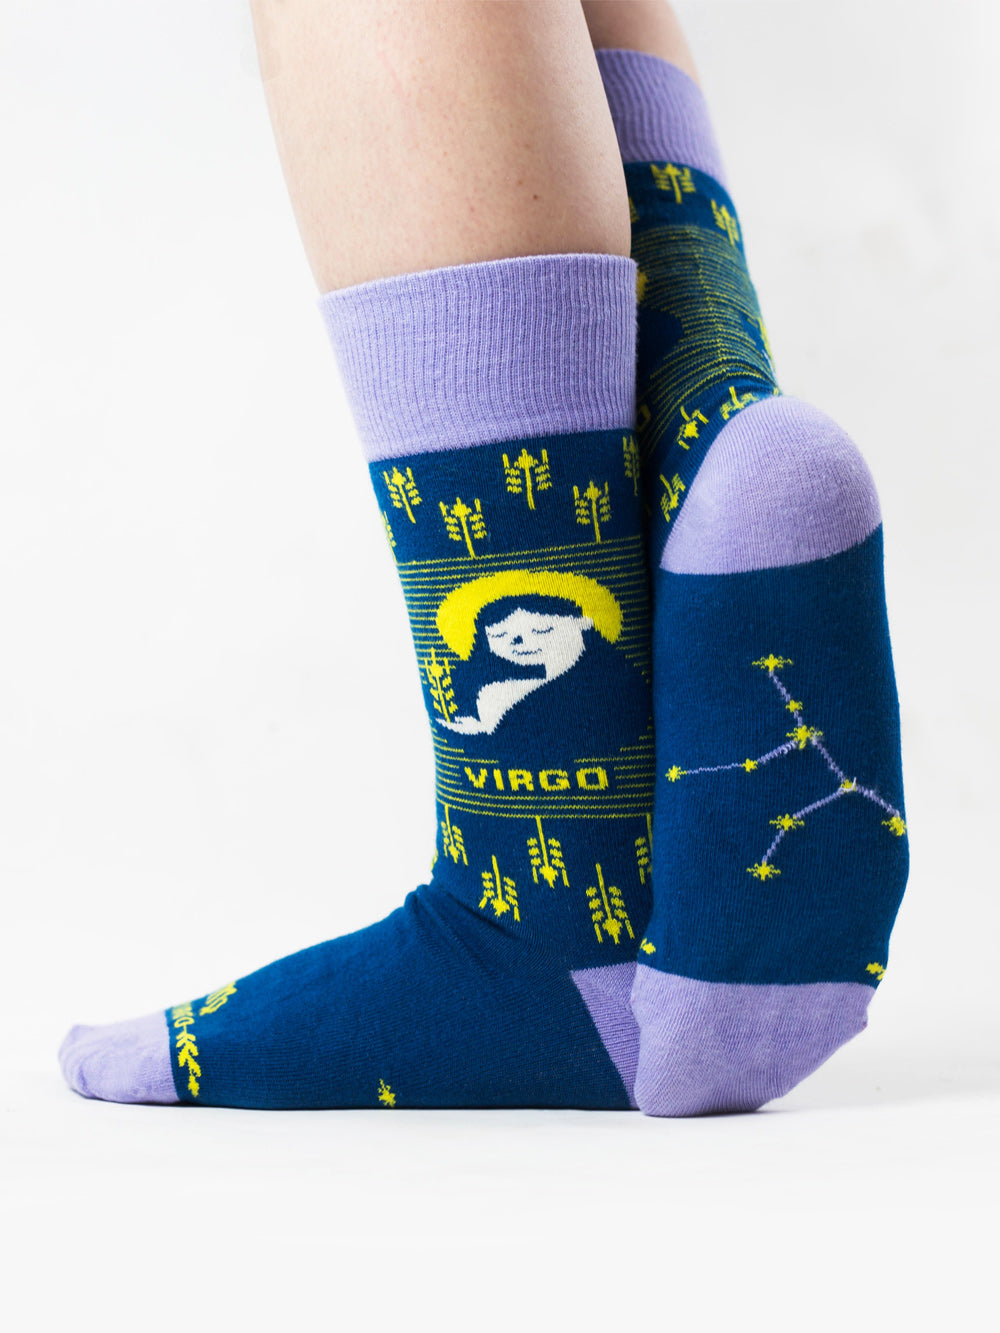 The Virgo - Sock Club Store